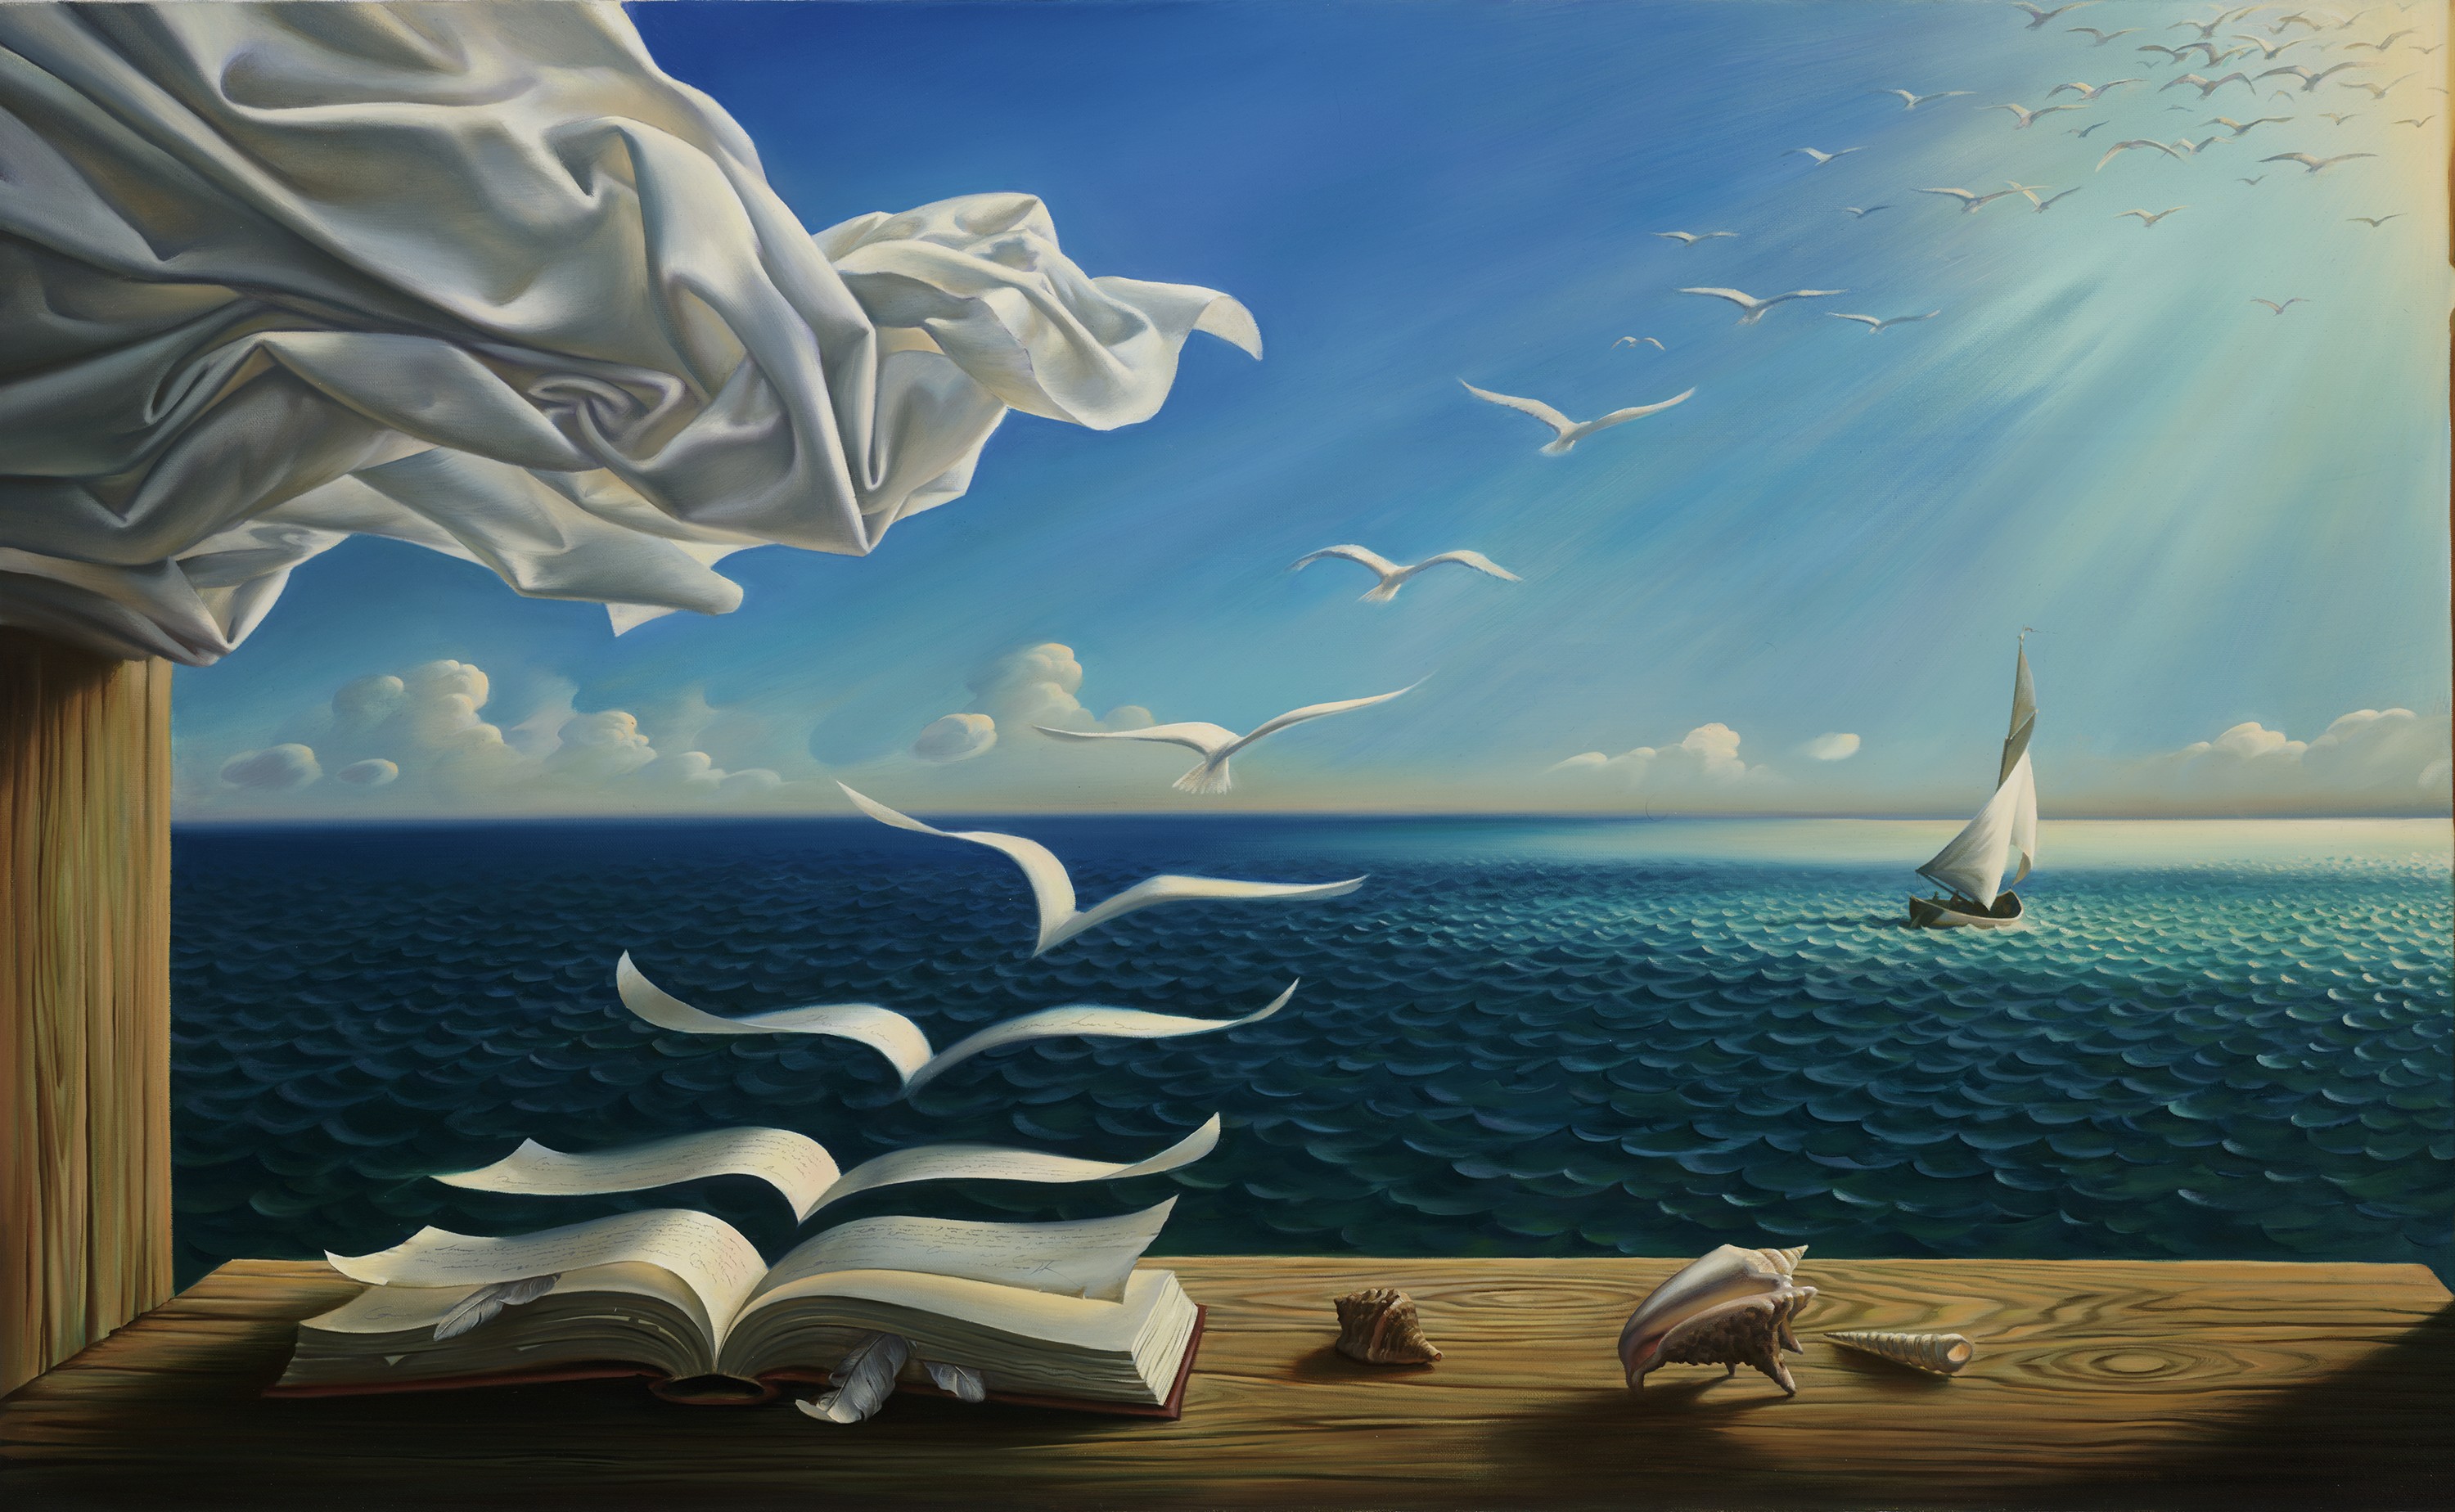 Digital Art Fantasy Art Nature Painting Sea Seashell Table Wood Curtains Feathers Clouds Sun Sunligh 3000x1848